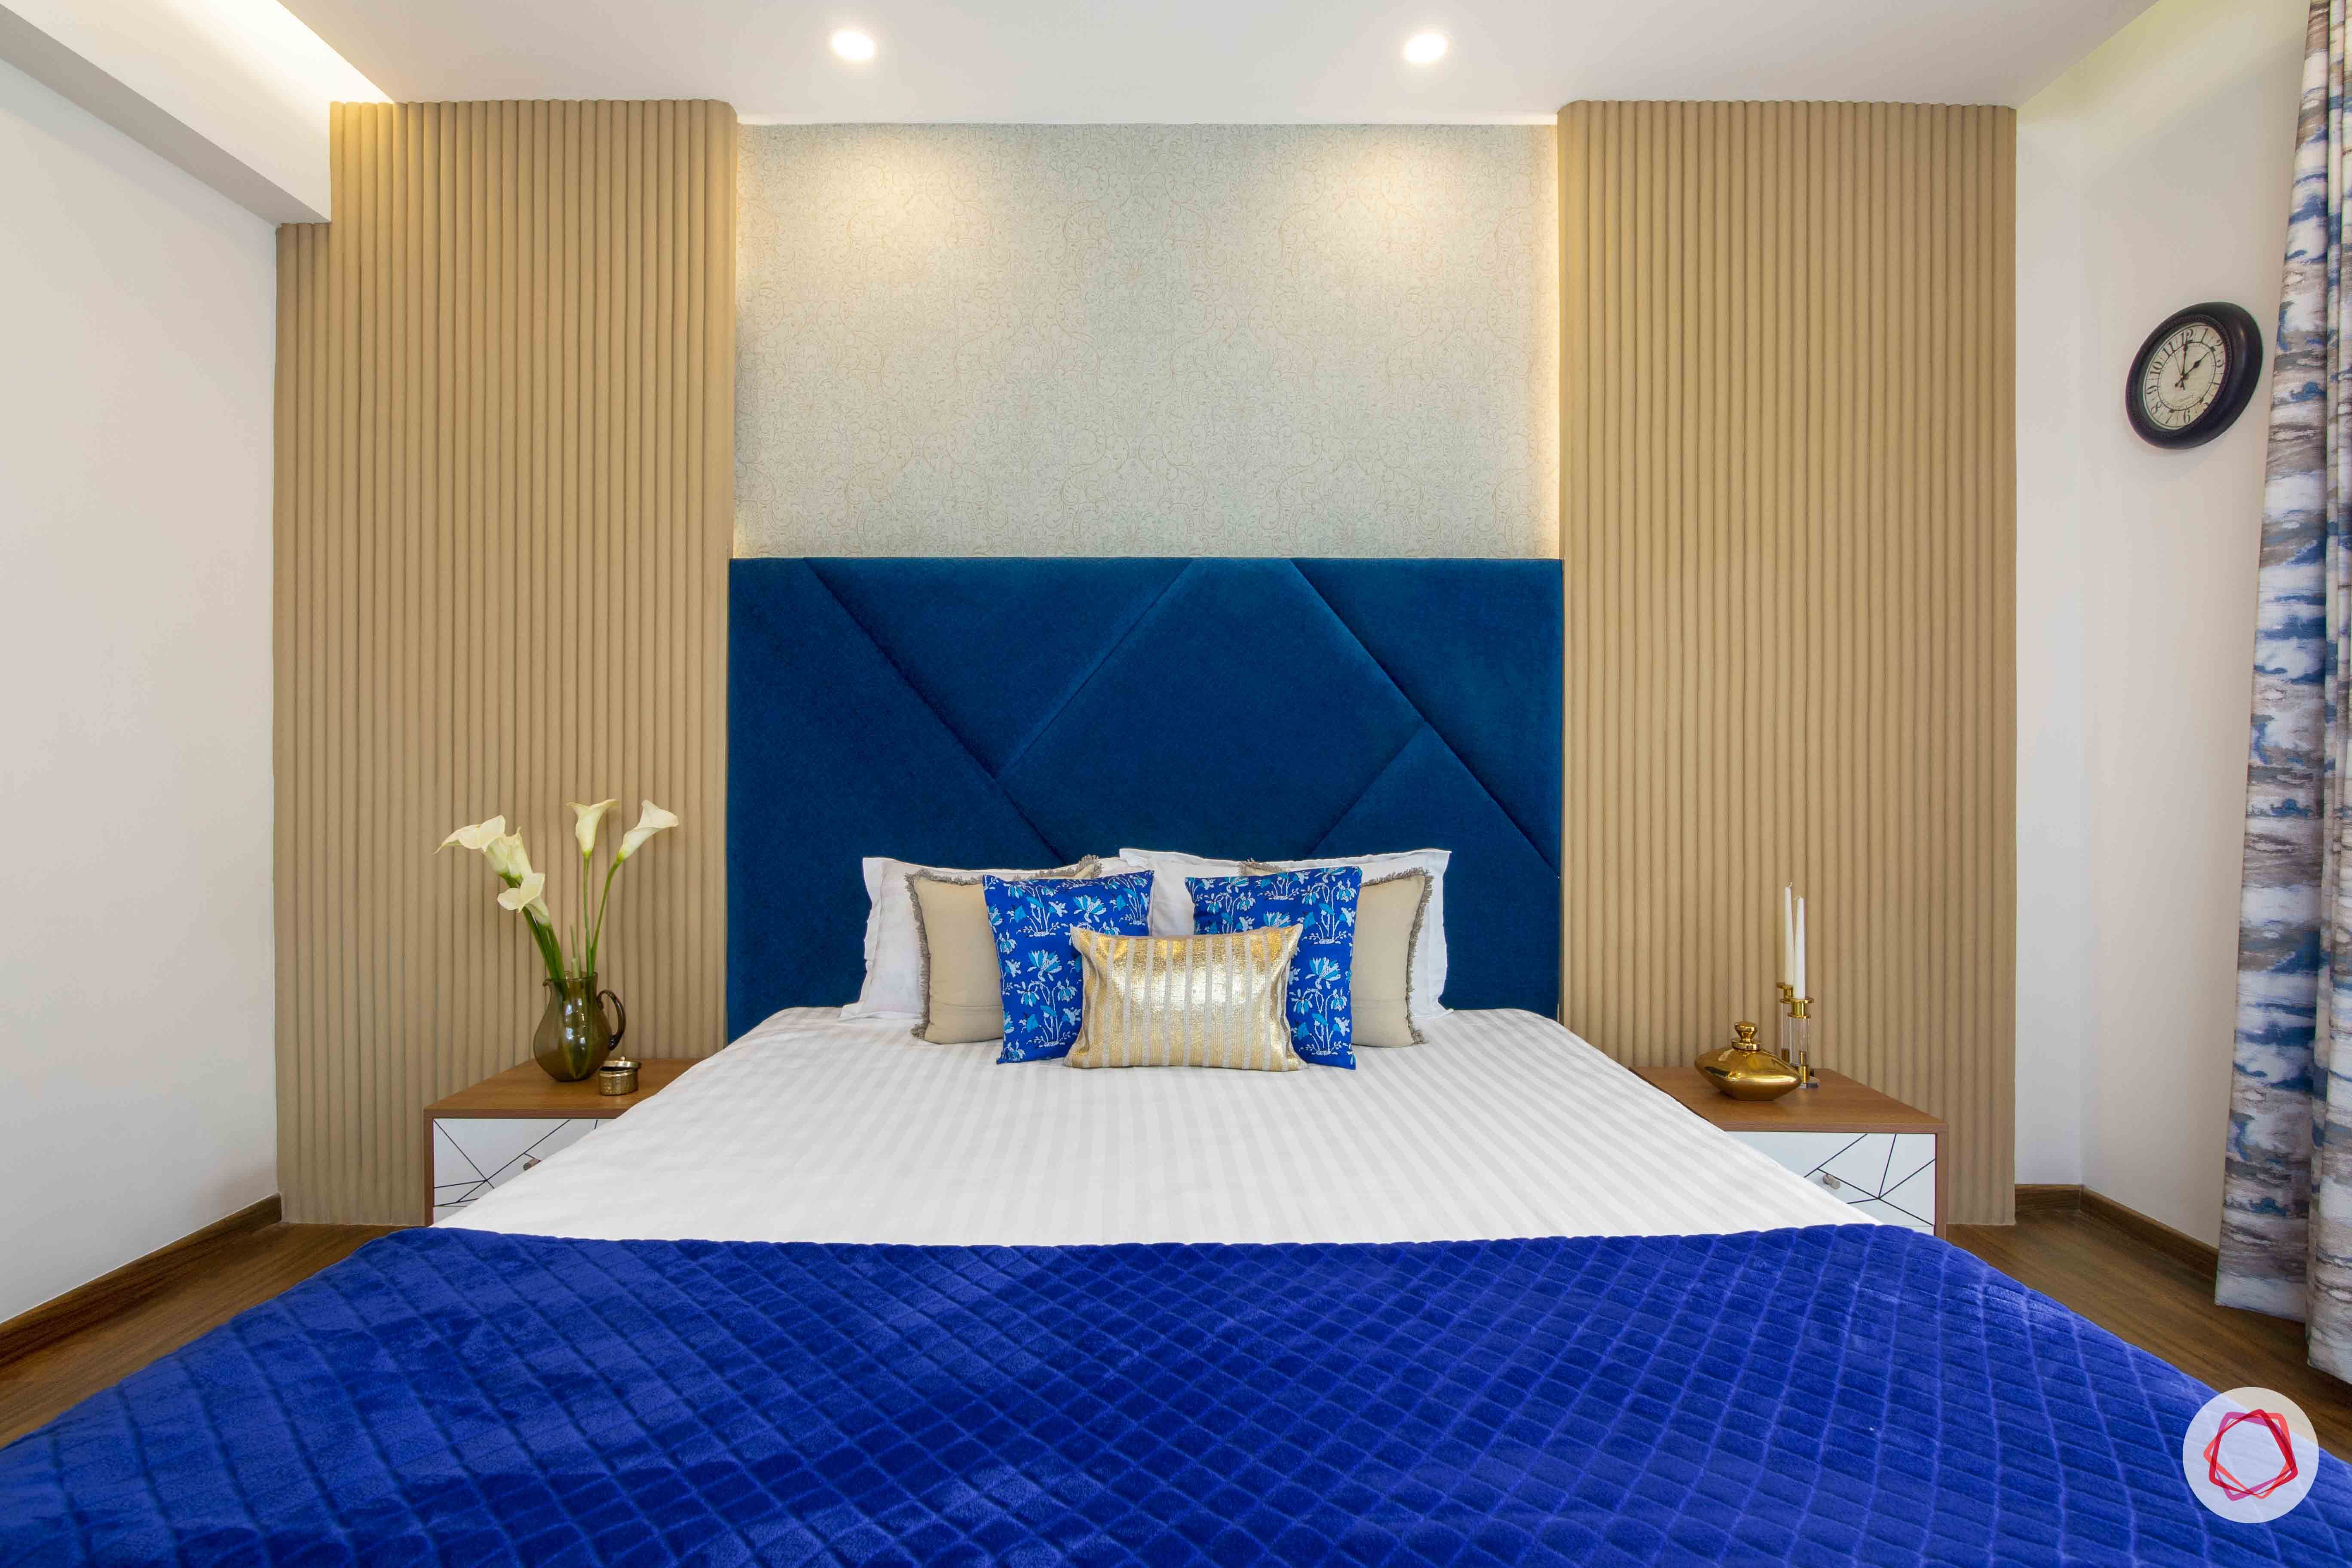 3 bedroom flat design-headboard designs-wall panel designs-livspace furniture-side table designs